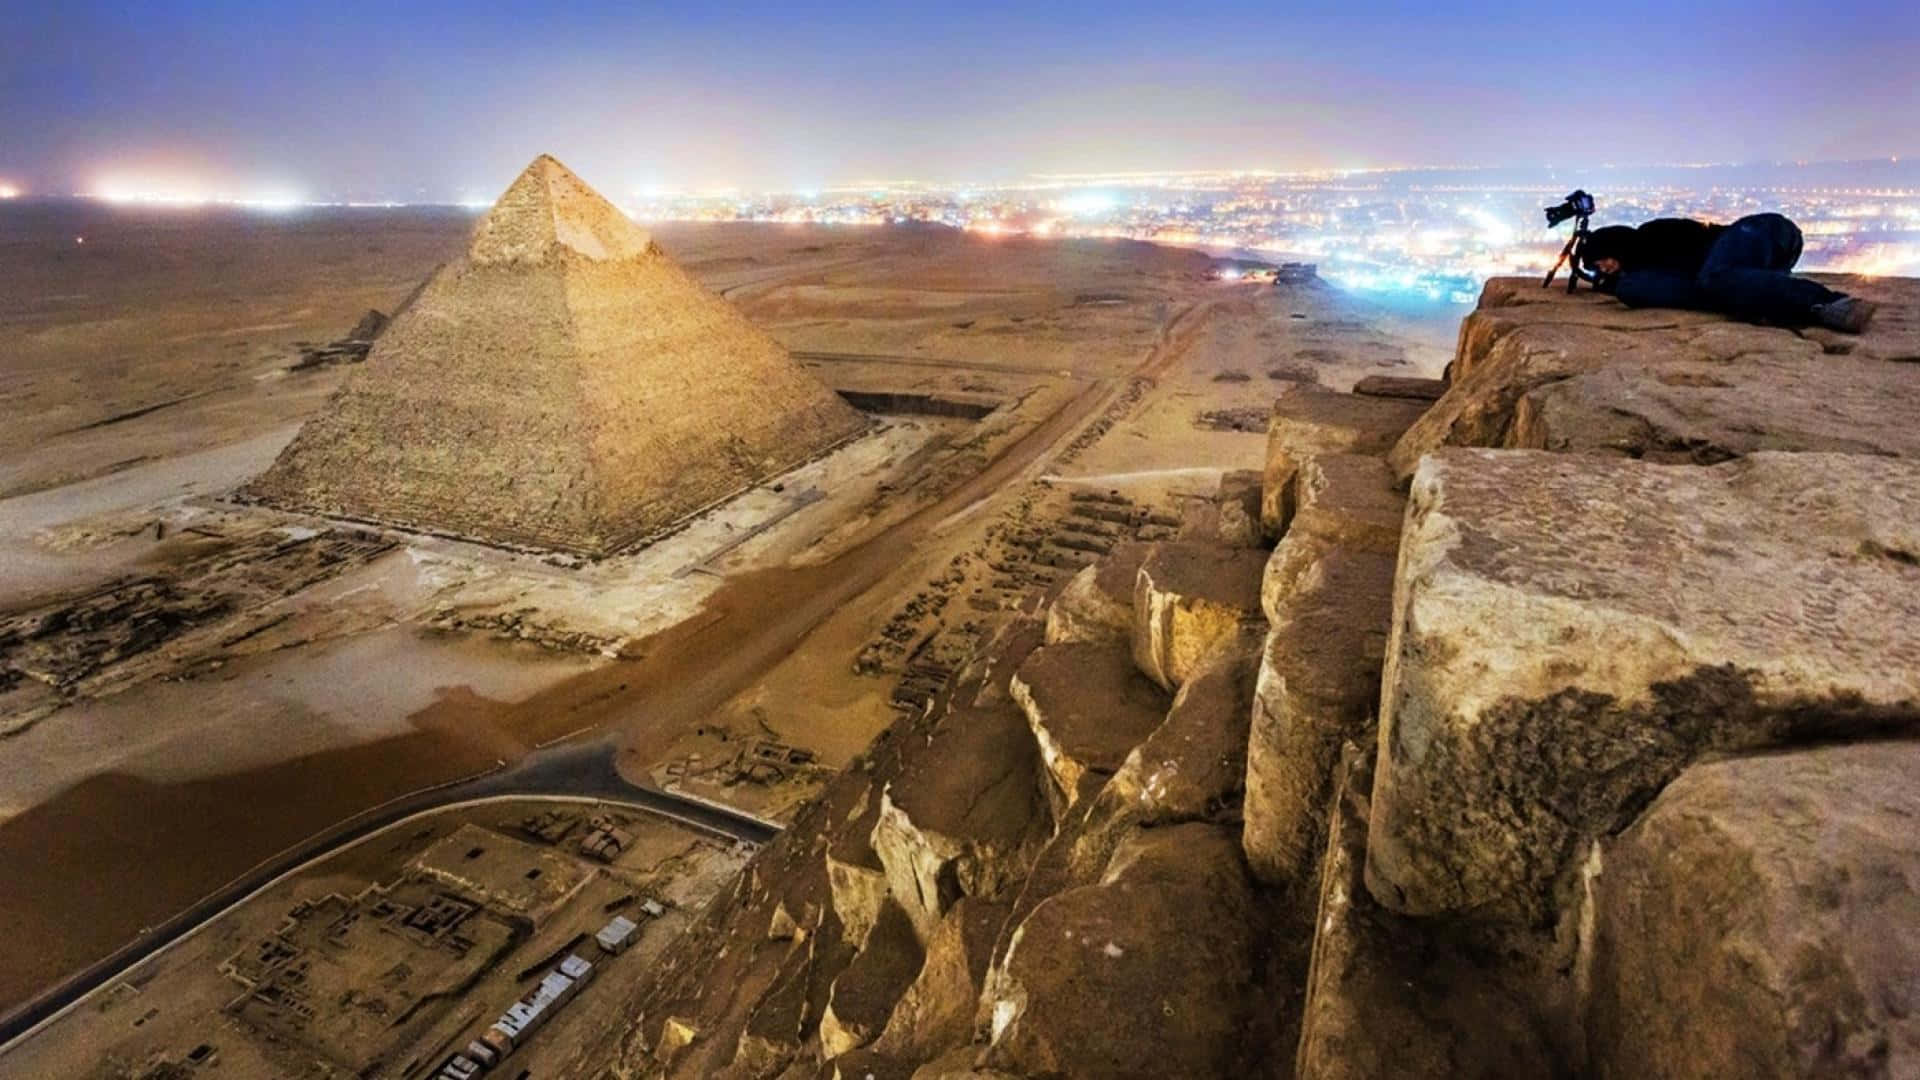 Sphinx Of Giza Illuminated At Night